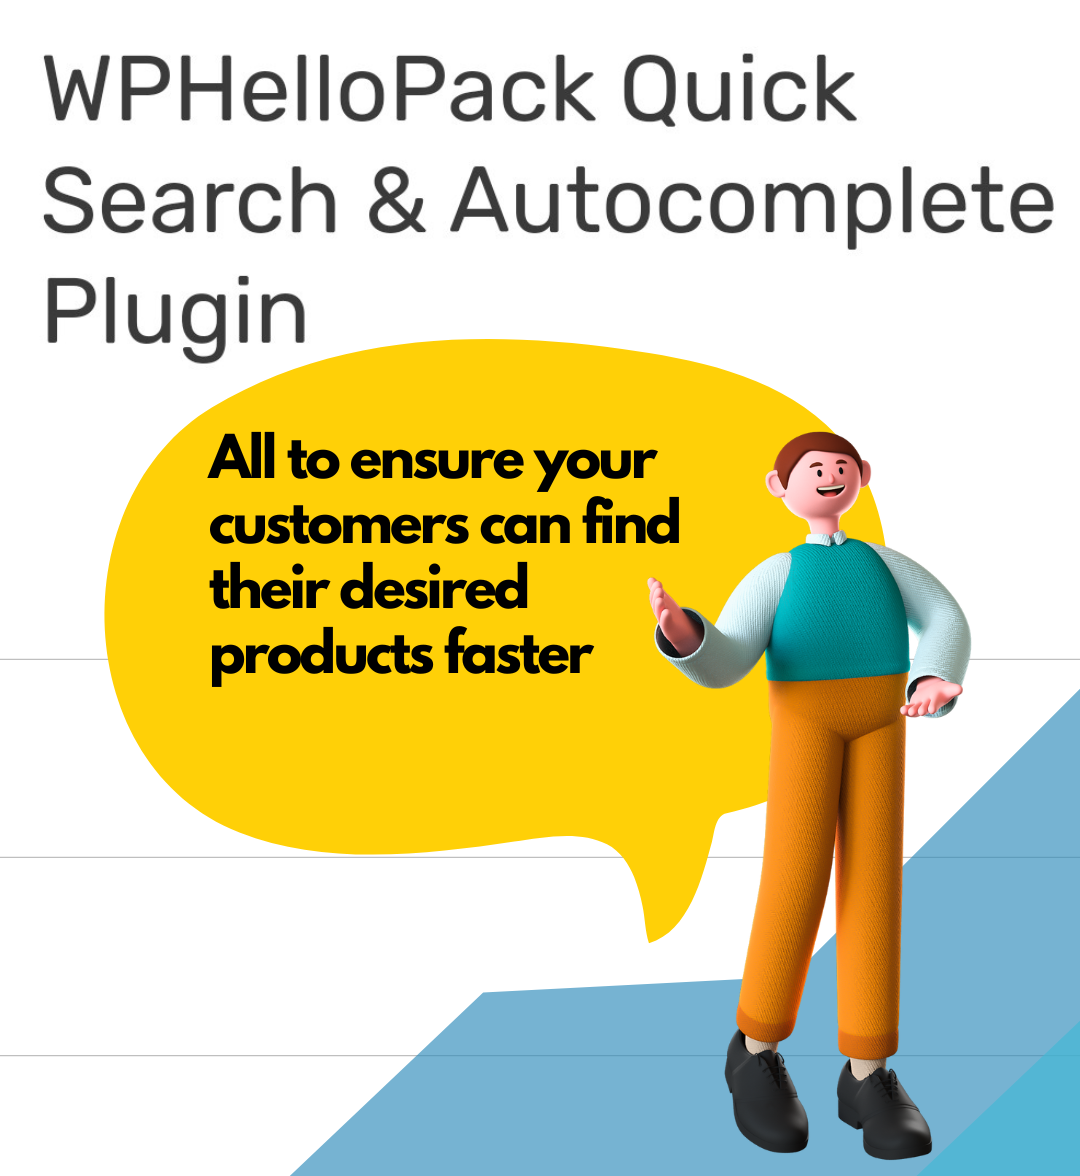 WPHelloPack Quick Search & Autocomplete Plugin